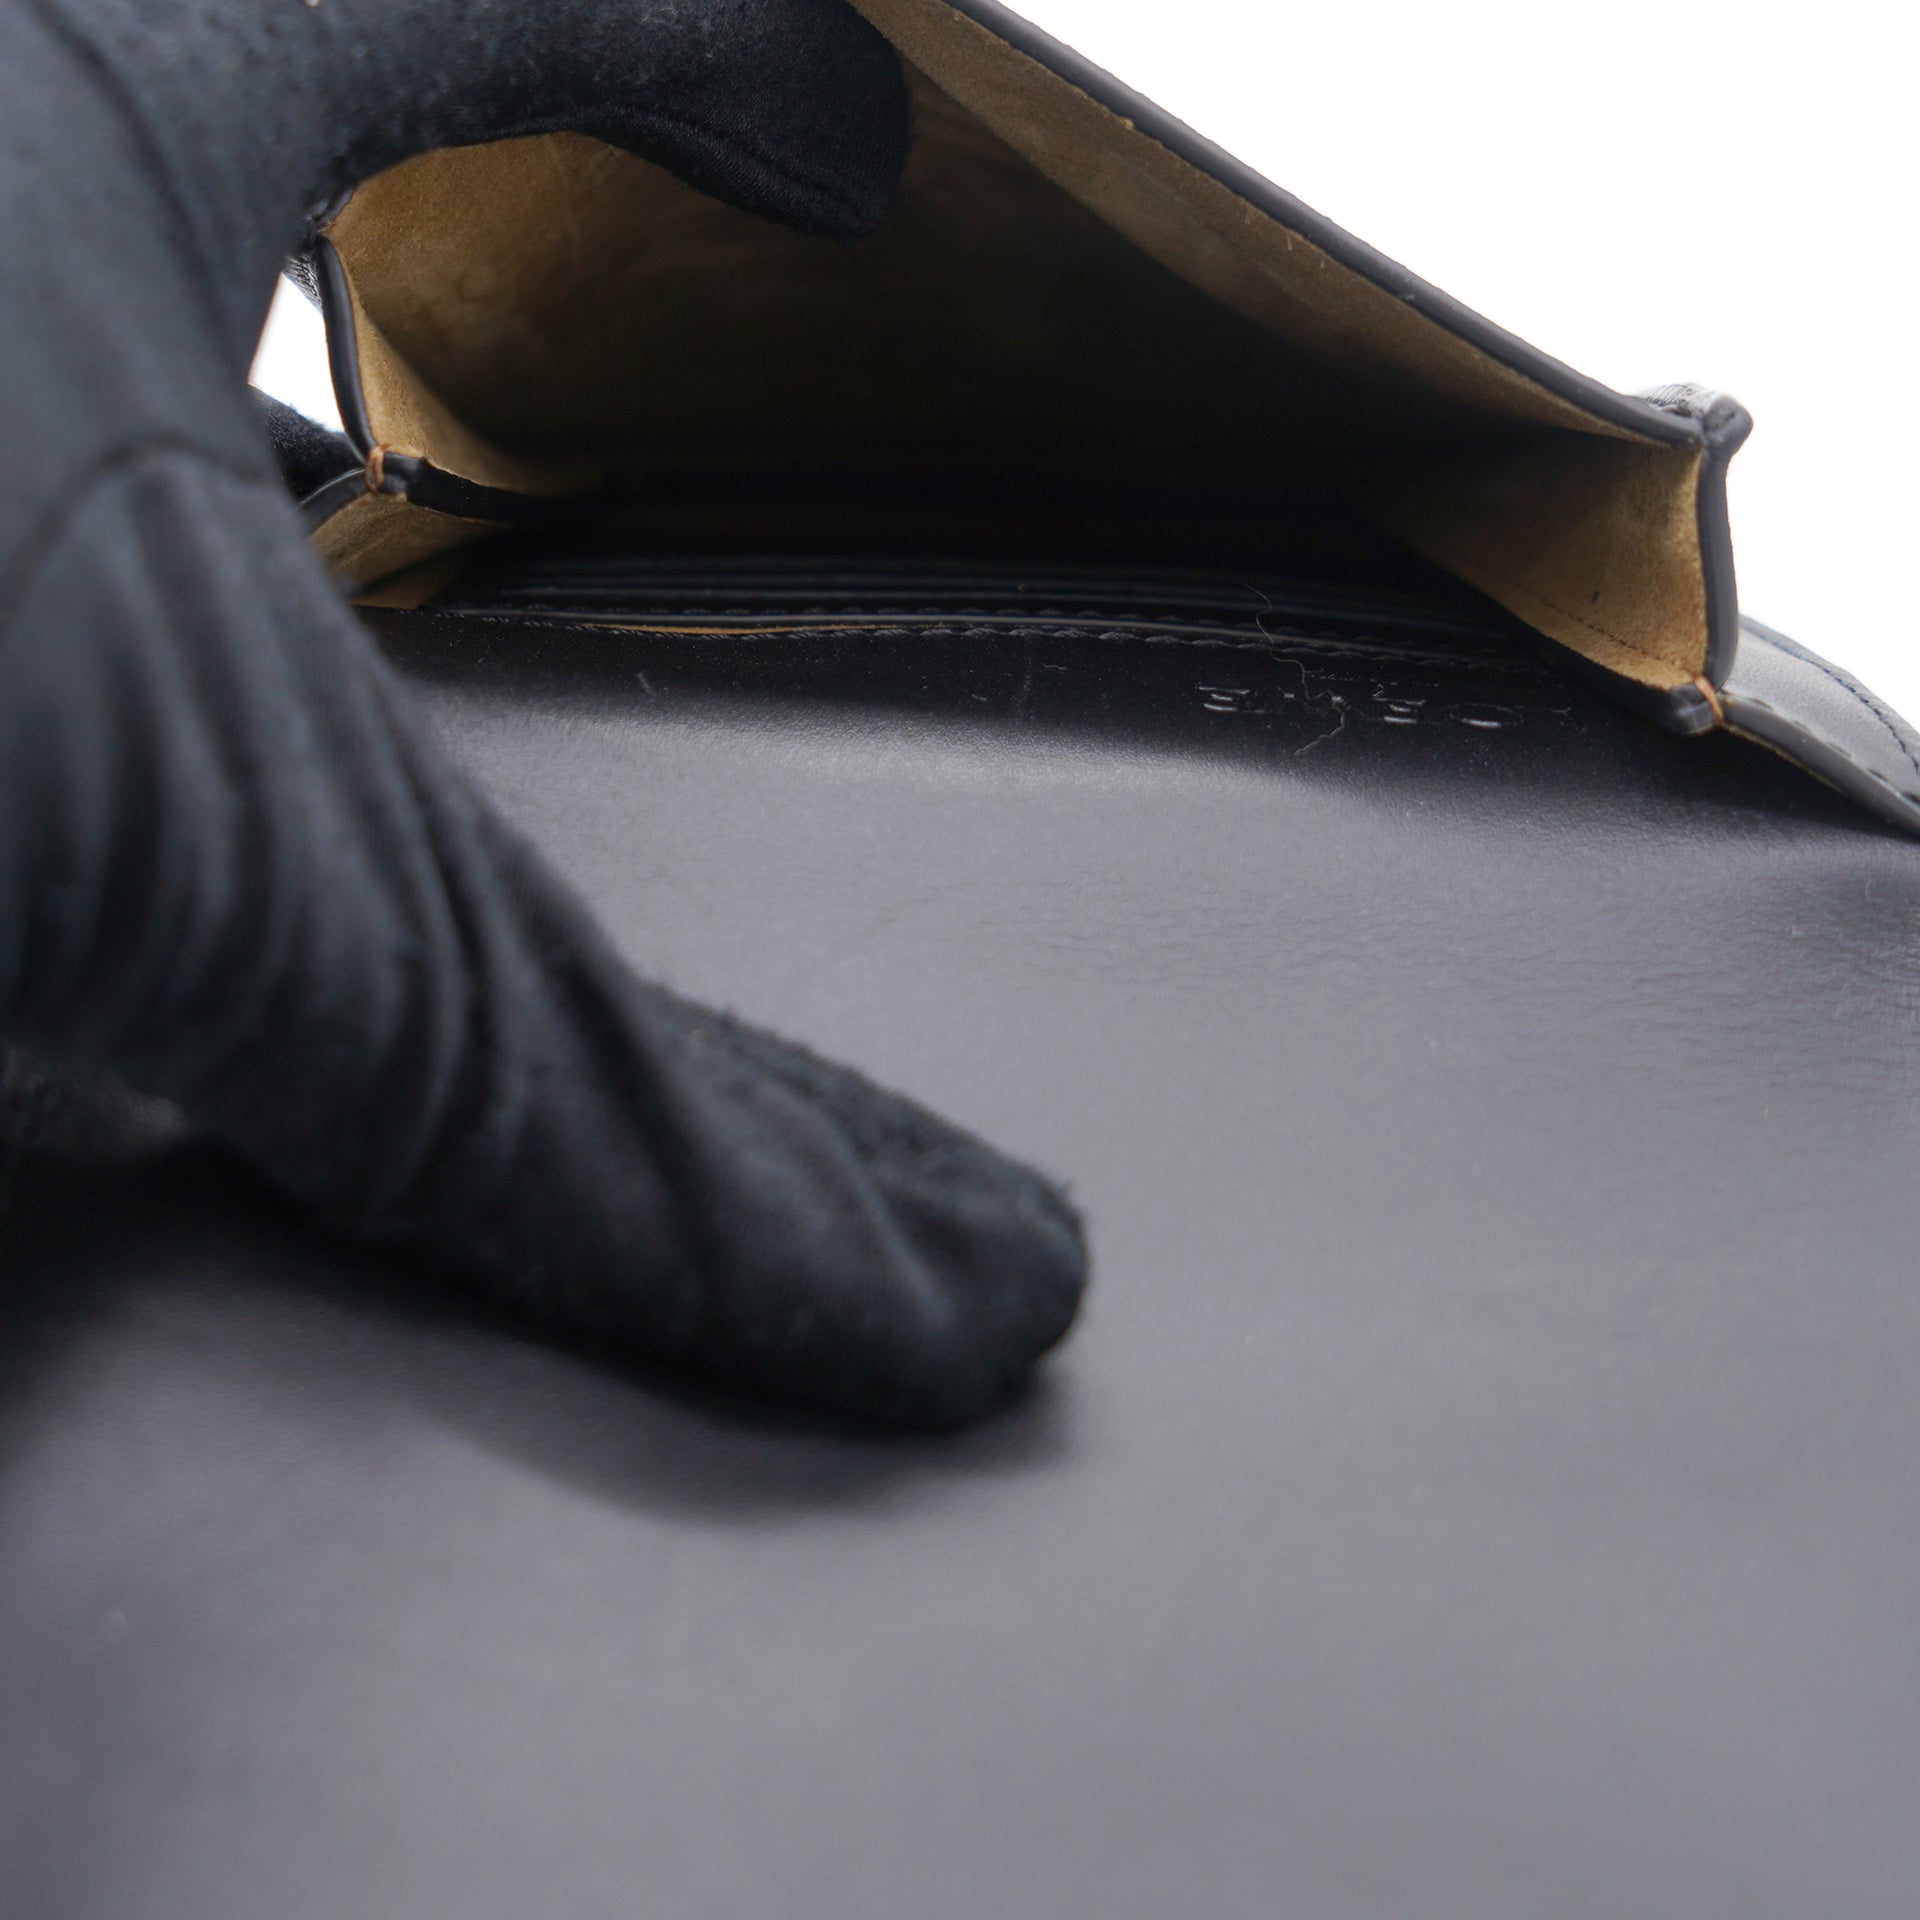 Black Leather Vertical Crossbody Bag